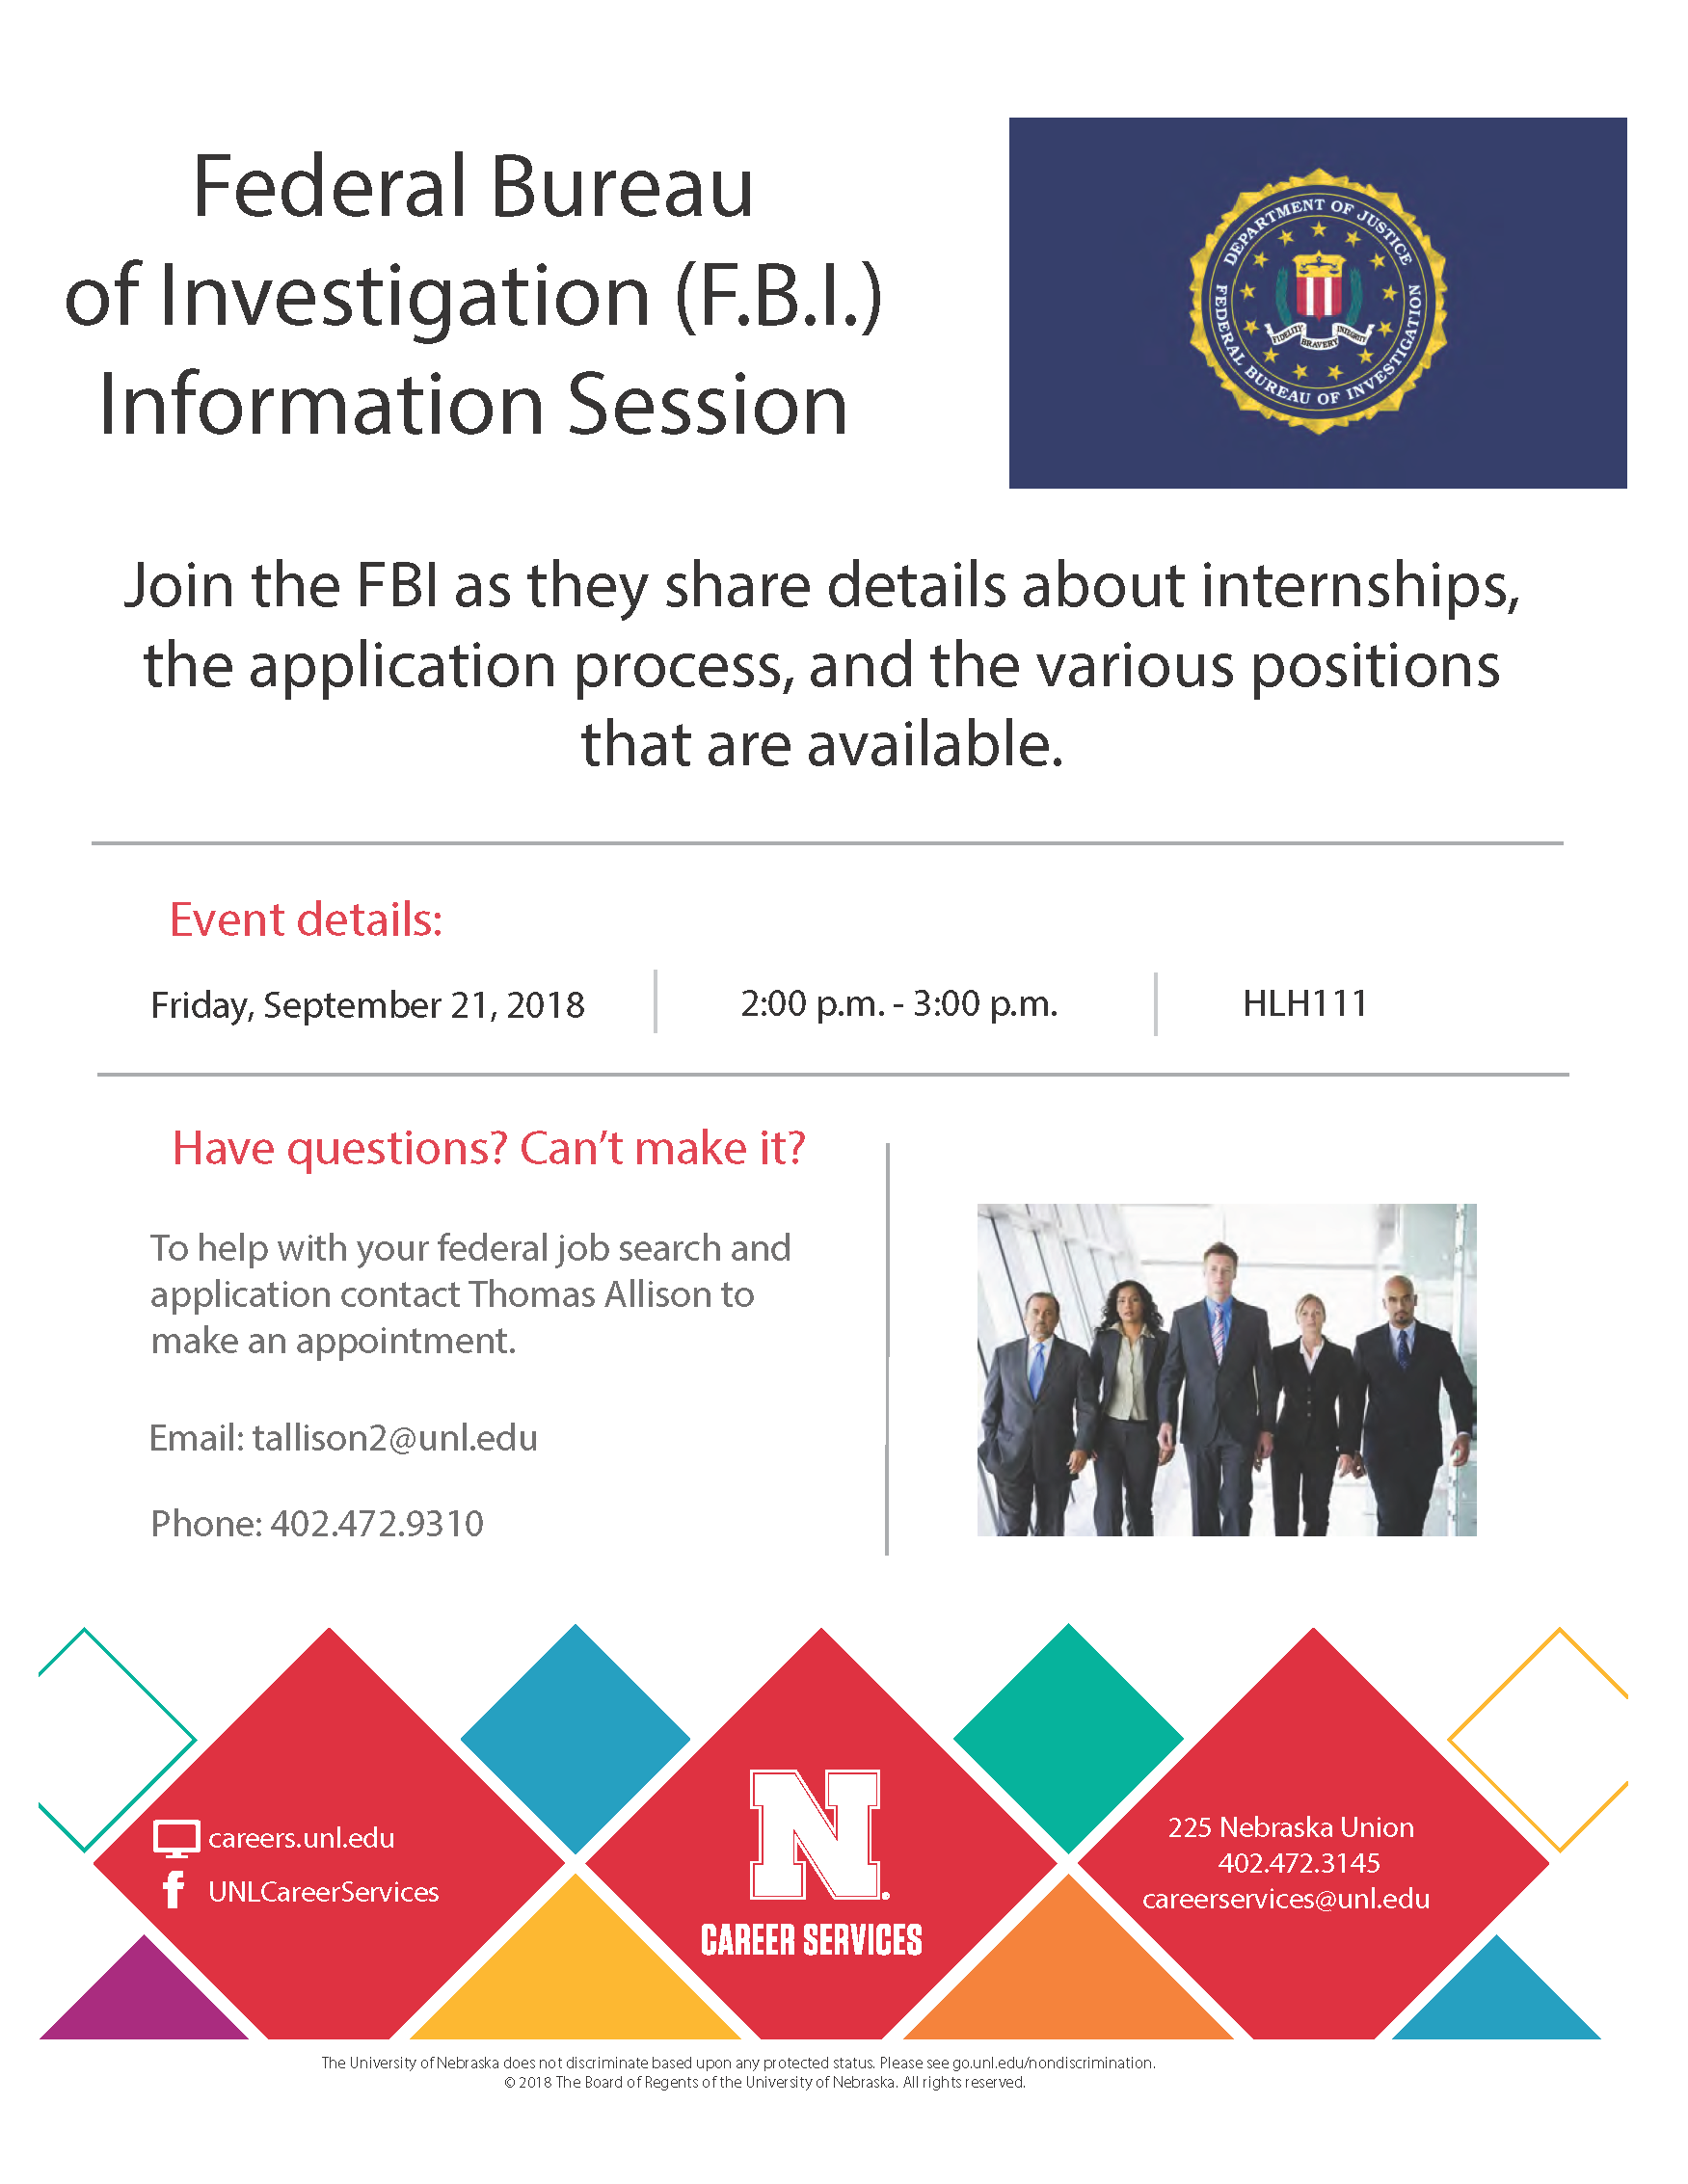 FBI Info session flyer